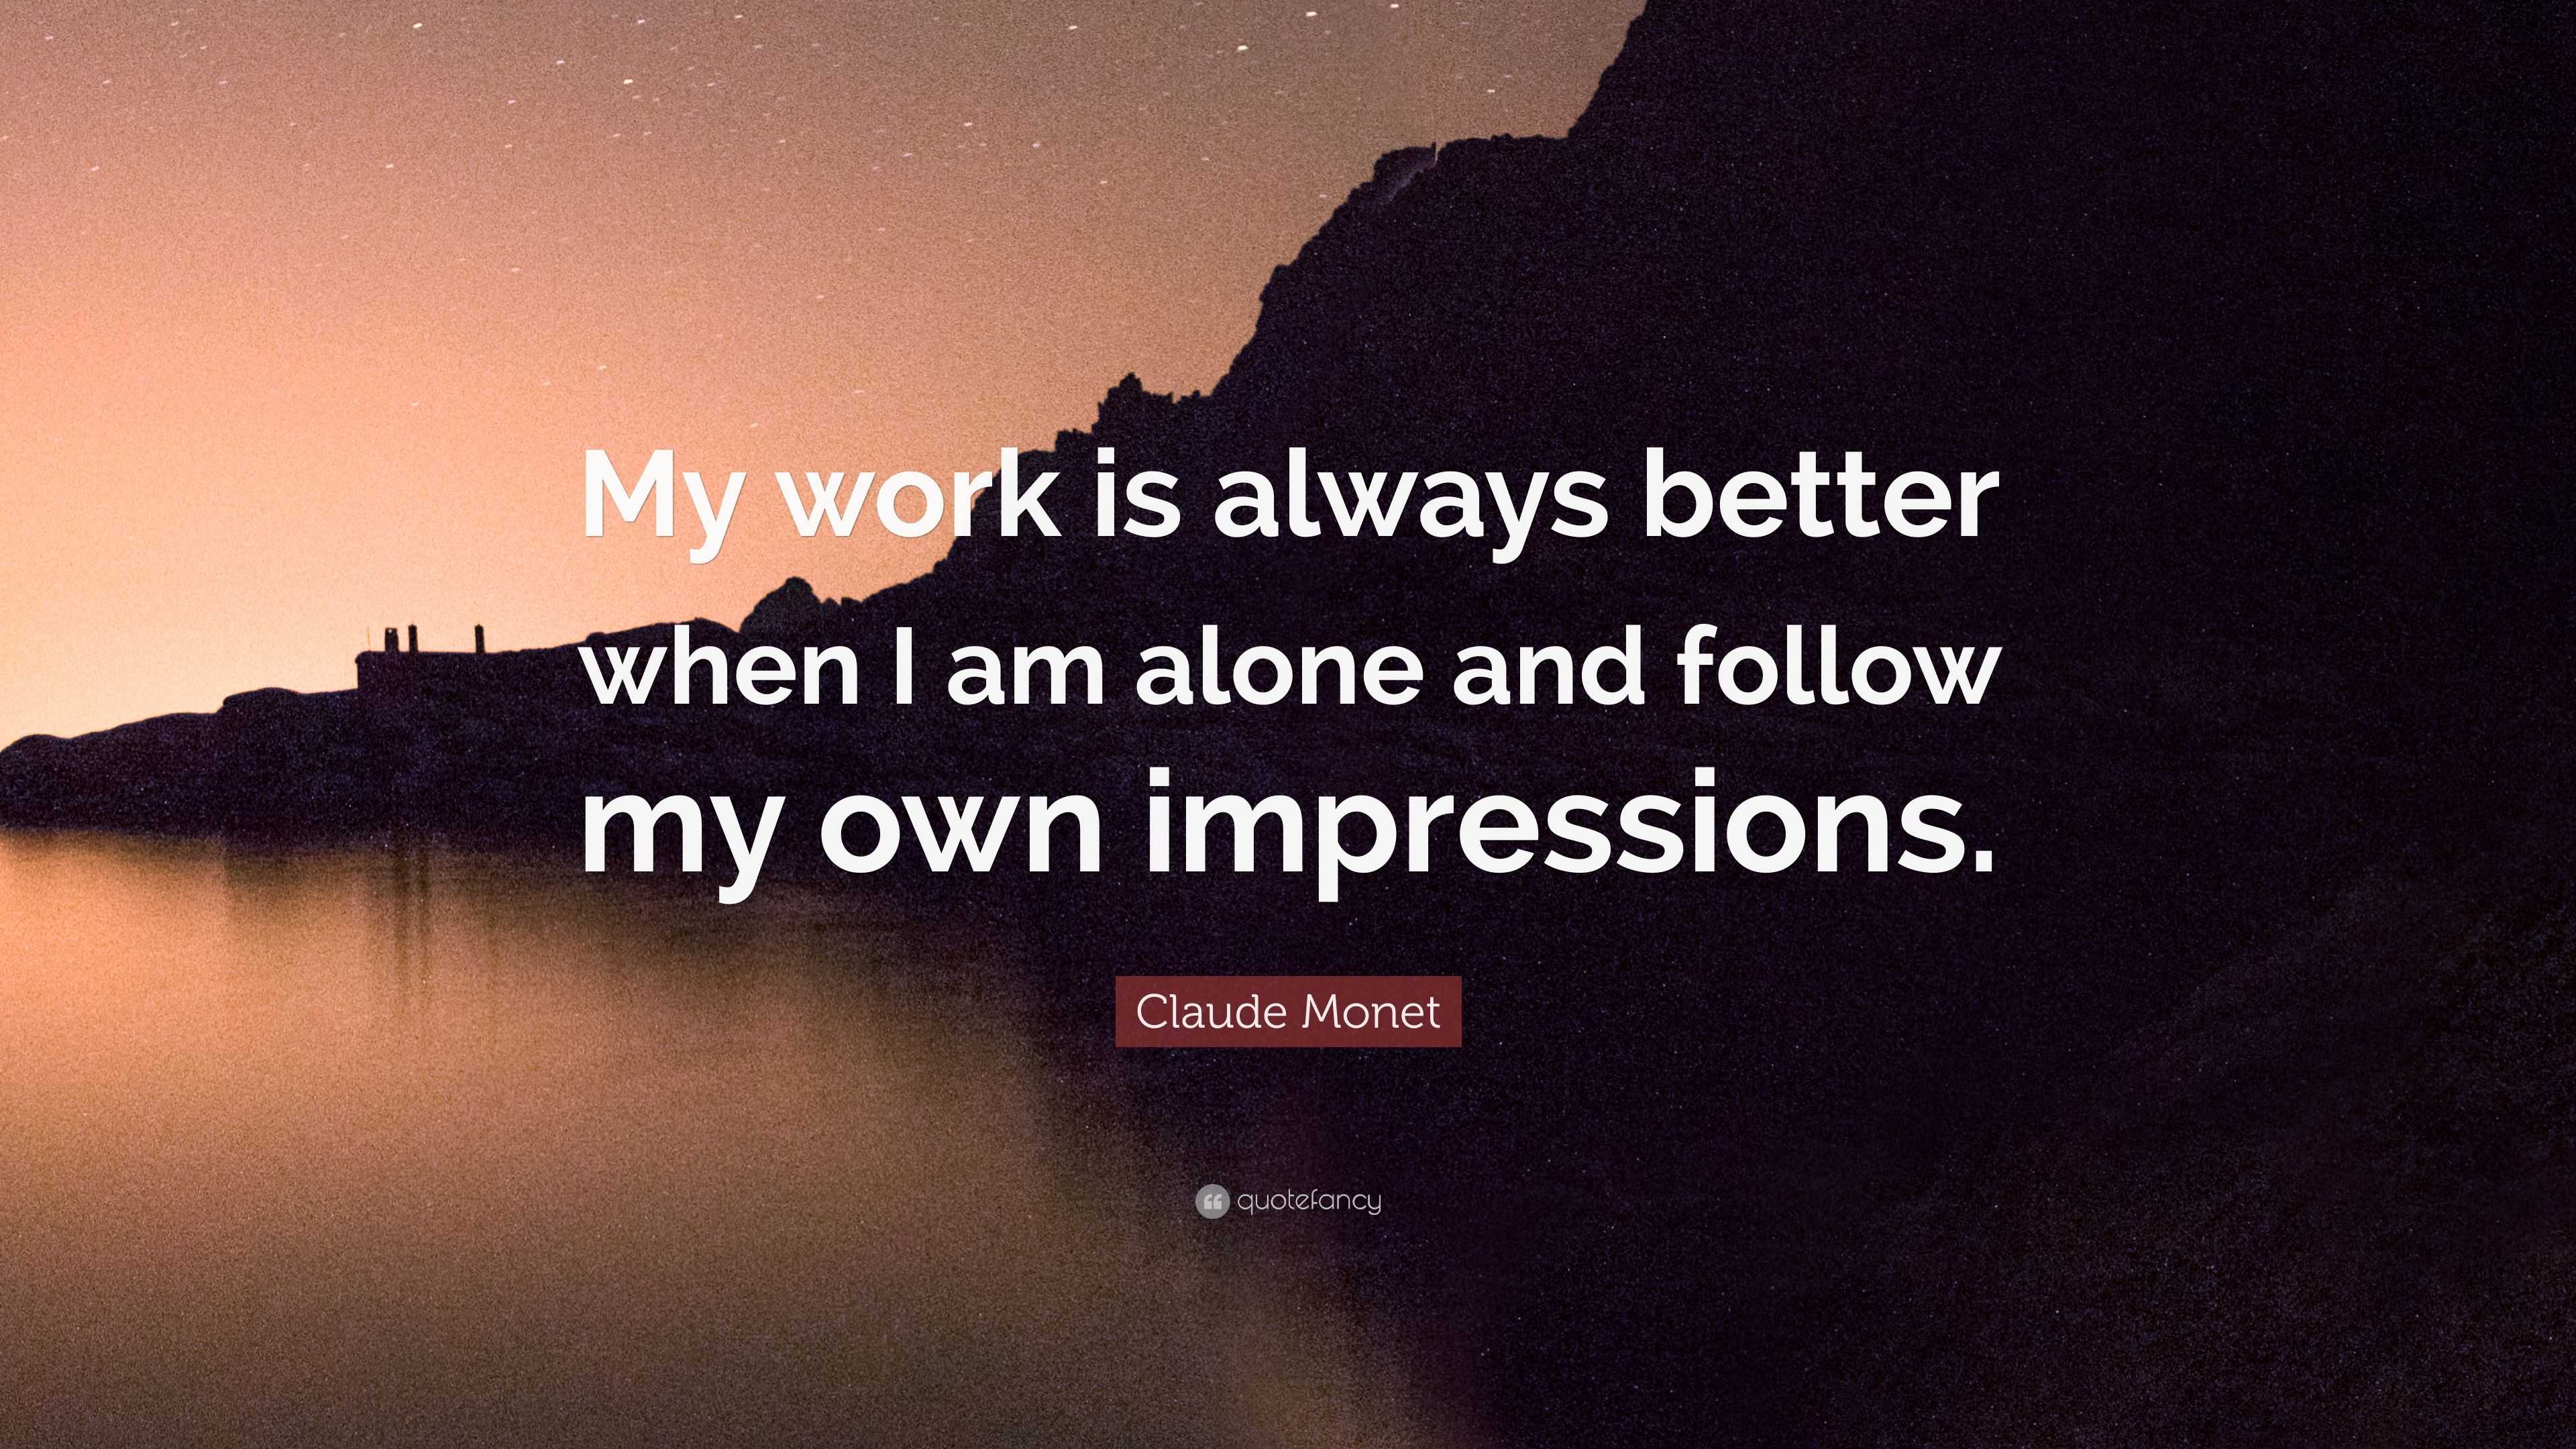 Claude Monet Quote: "My work is always better when I am ...